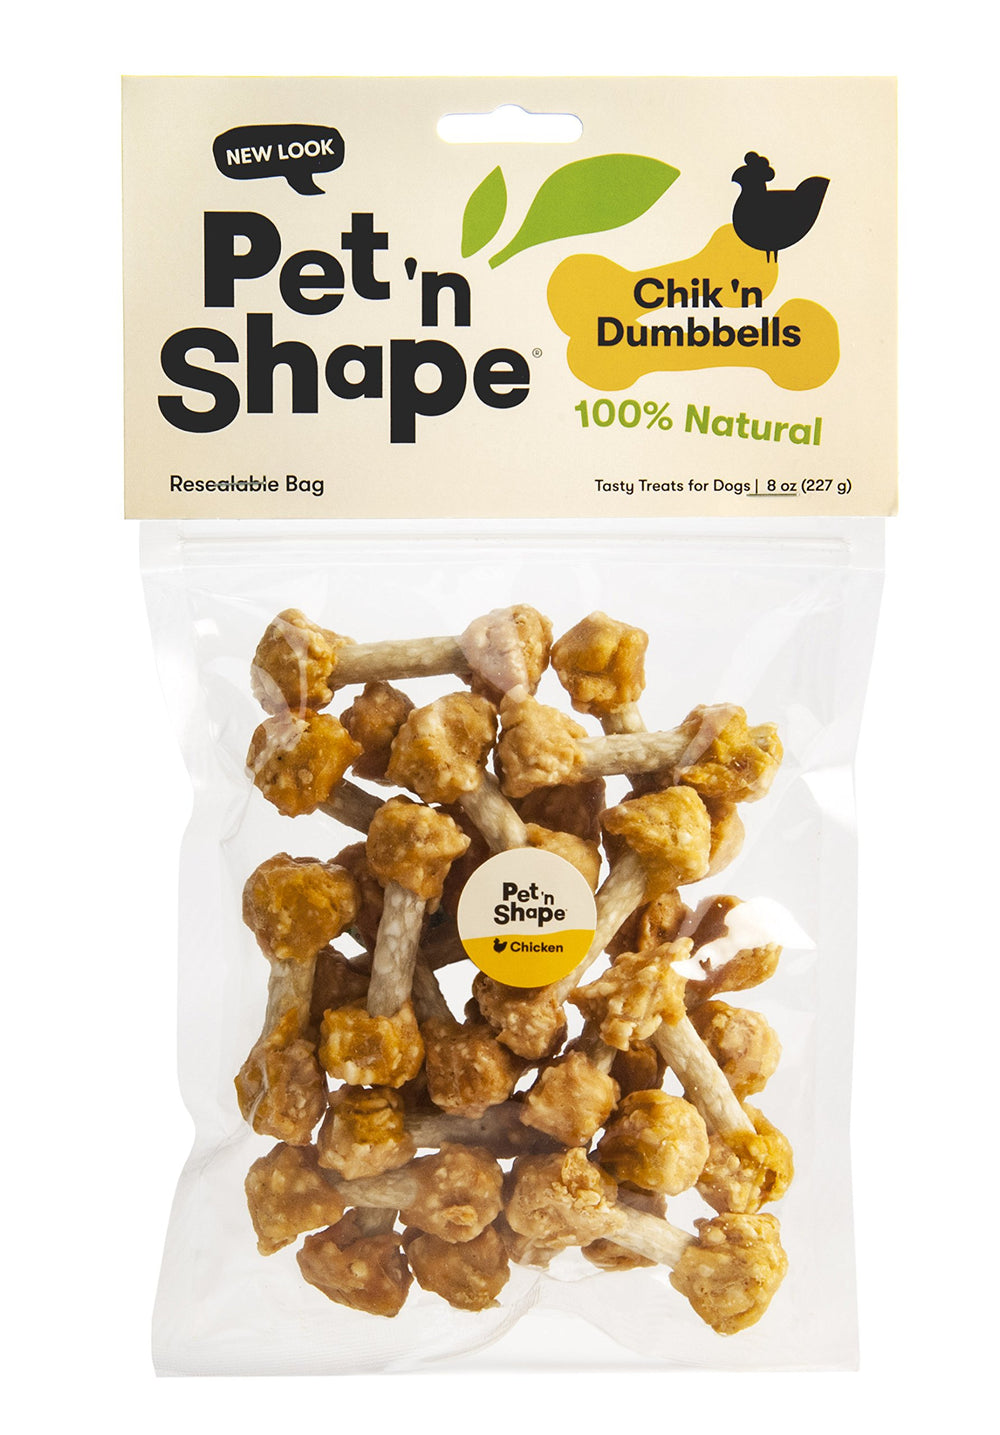 Pet 'n Shape Chik 'n Rice Dumbbells - All Natural Dog Treats, Chicken, 8 oz